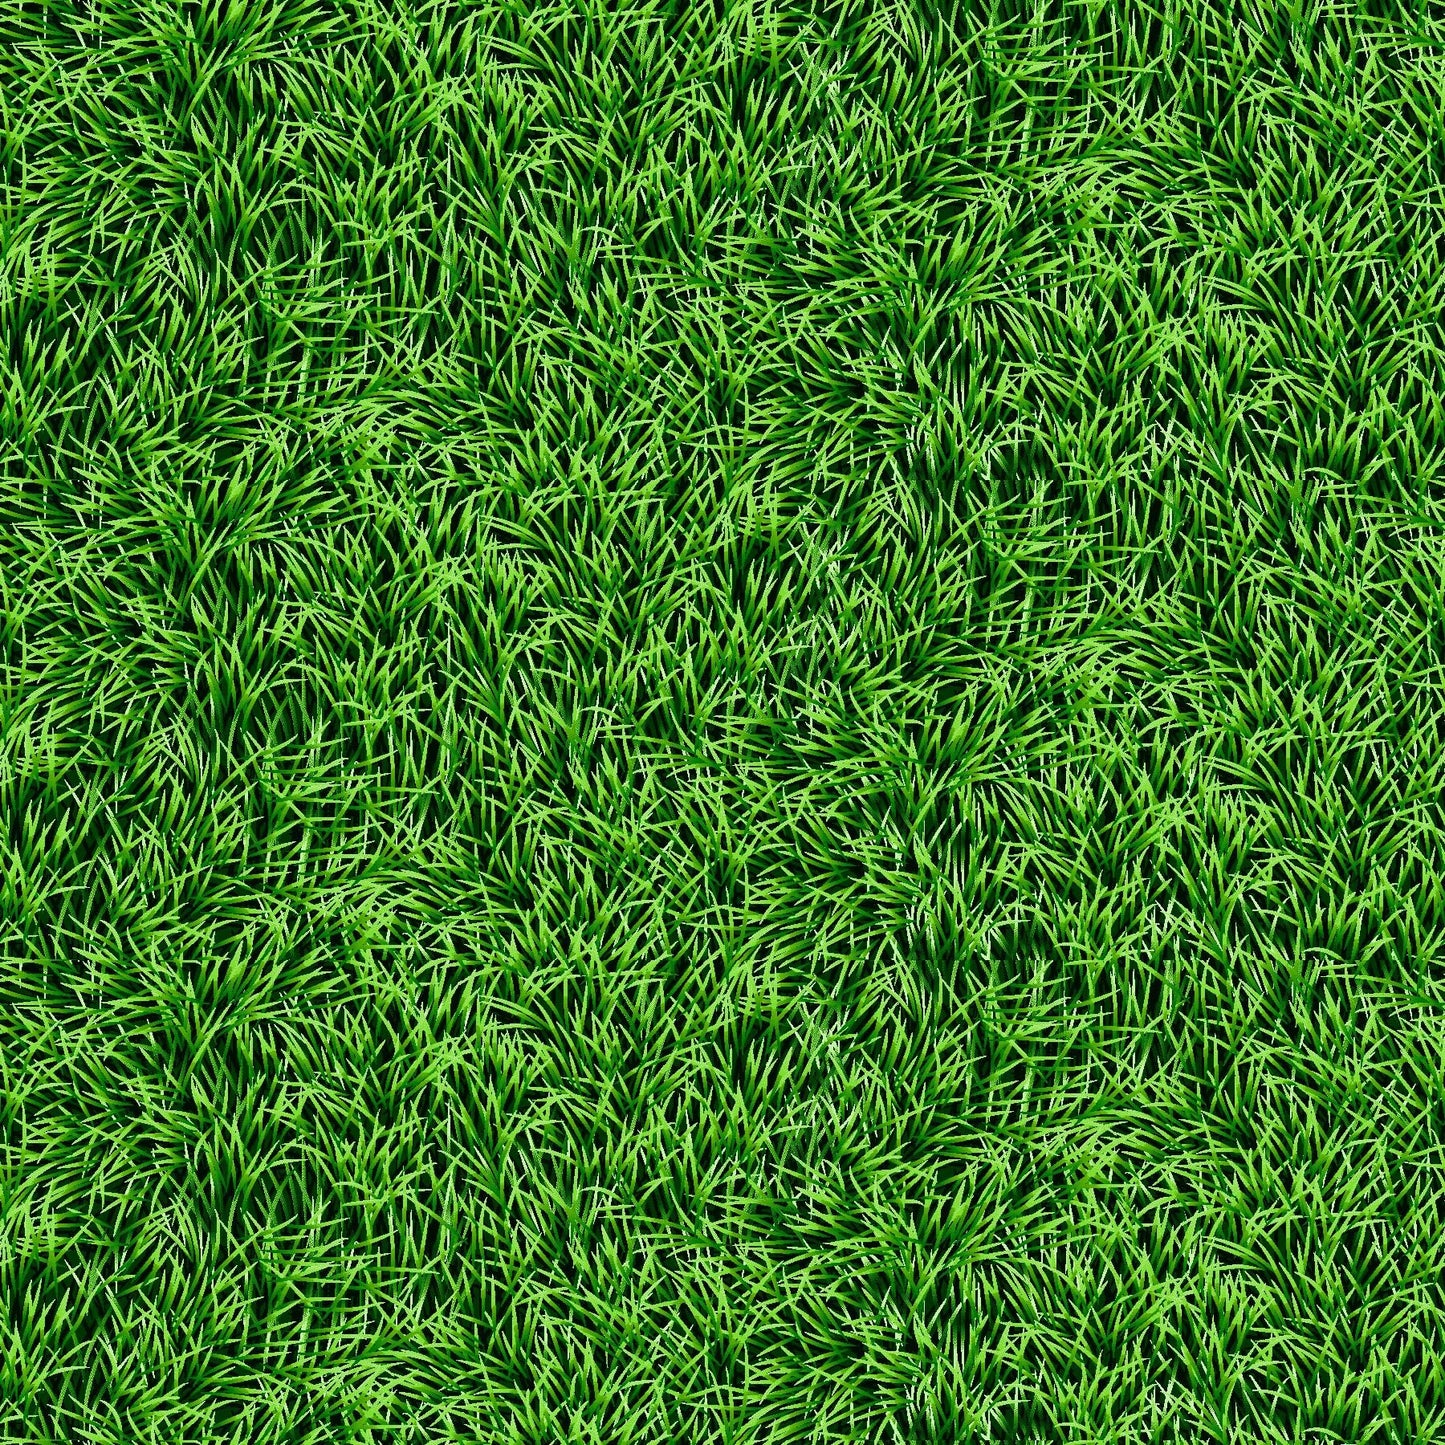 Born to Score Green Grass 5283-66 Cotton Woven Fabric